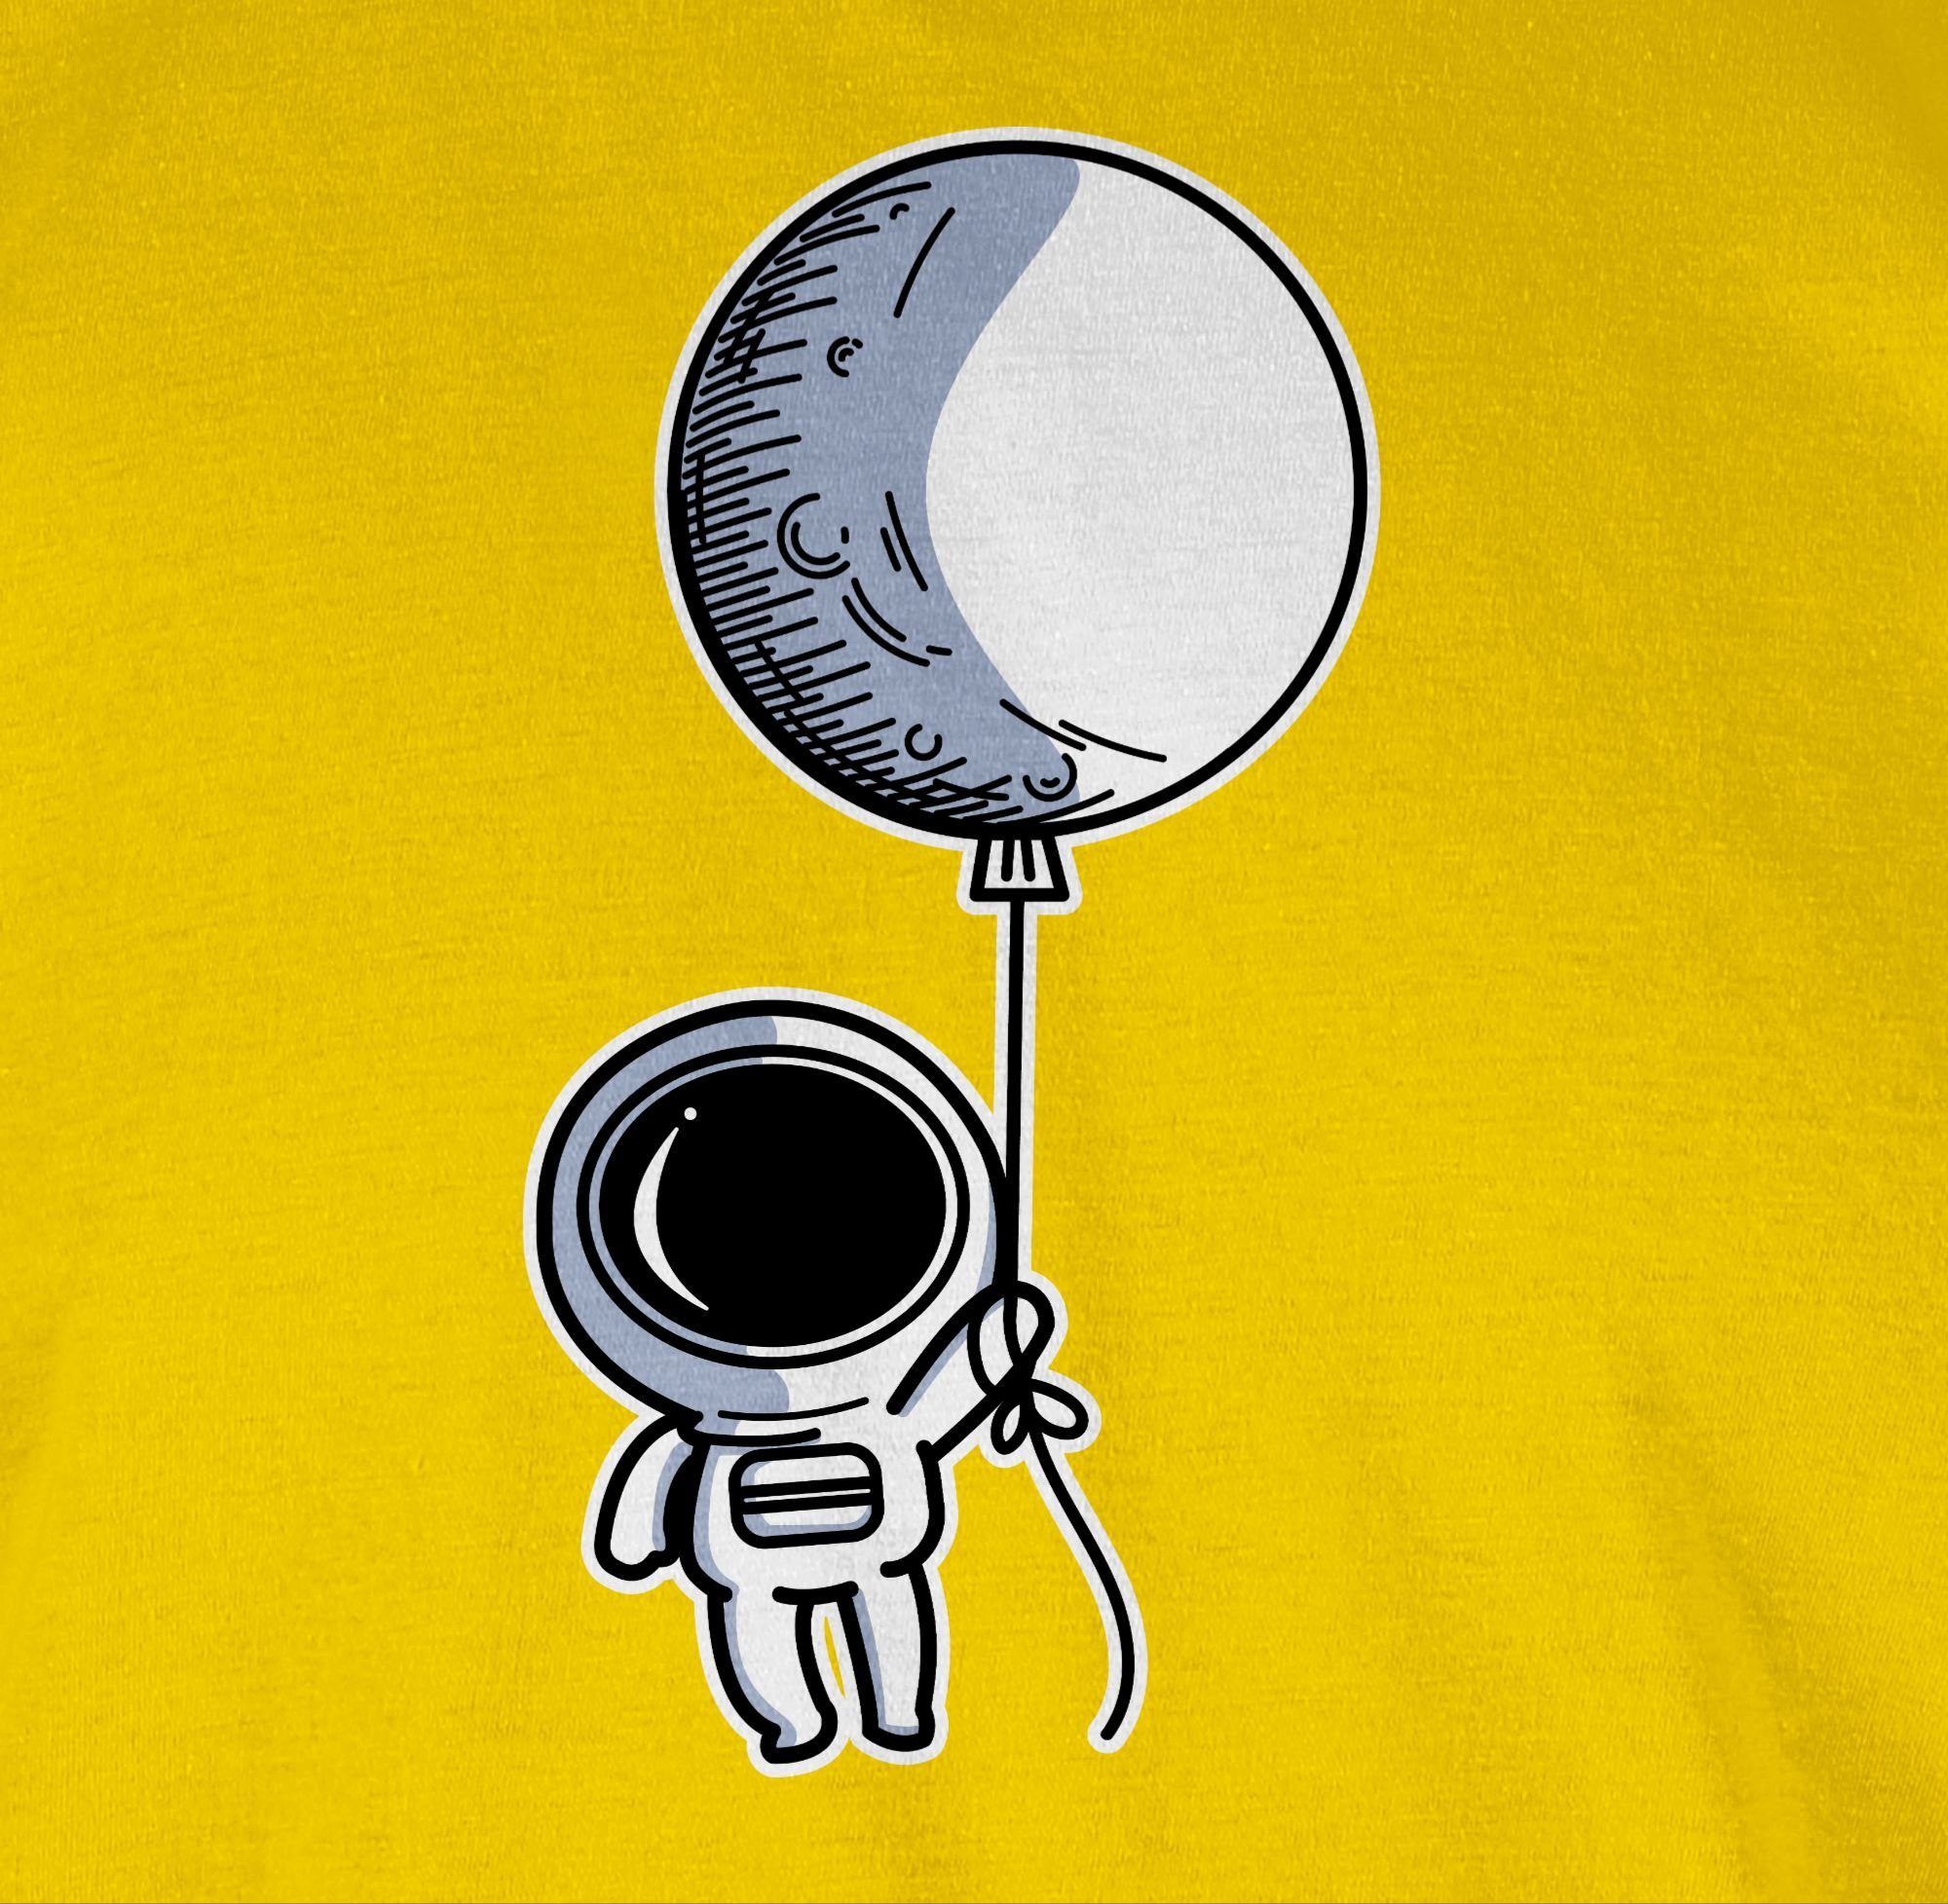 Astronaut Geschenke Nerd 02 mit Gelb Shirtracer T-Shirt Luftballon